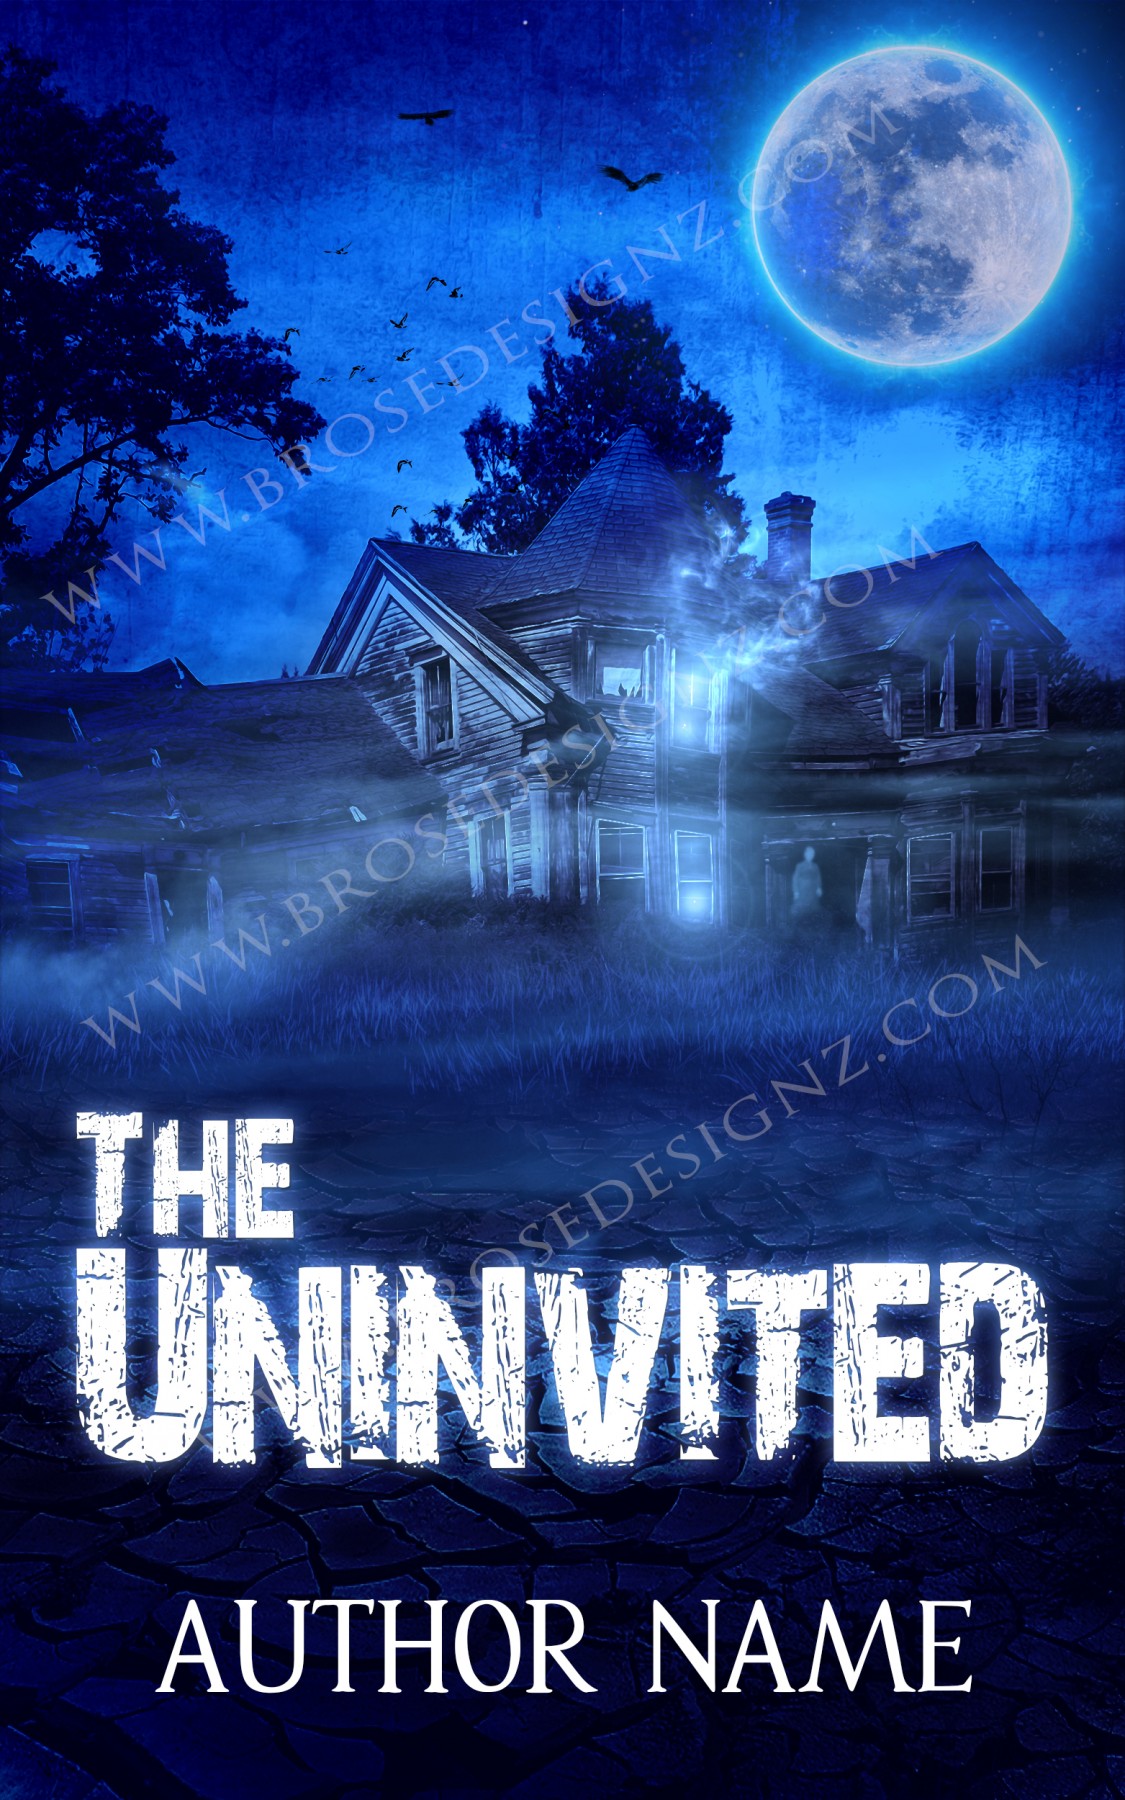 The Uninvited by Tim Wynne-Jones